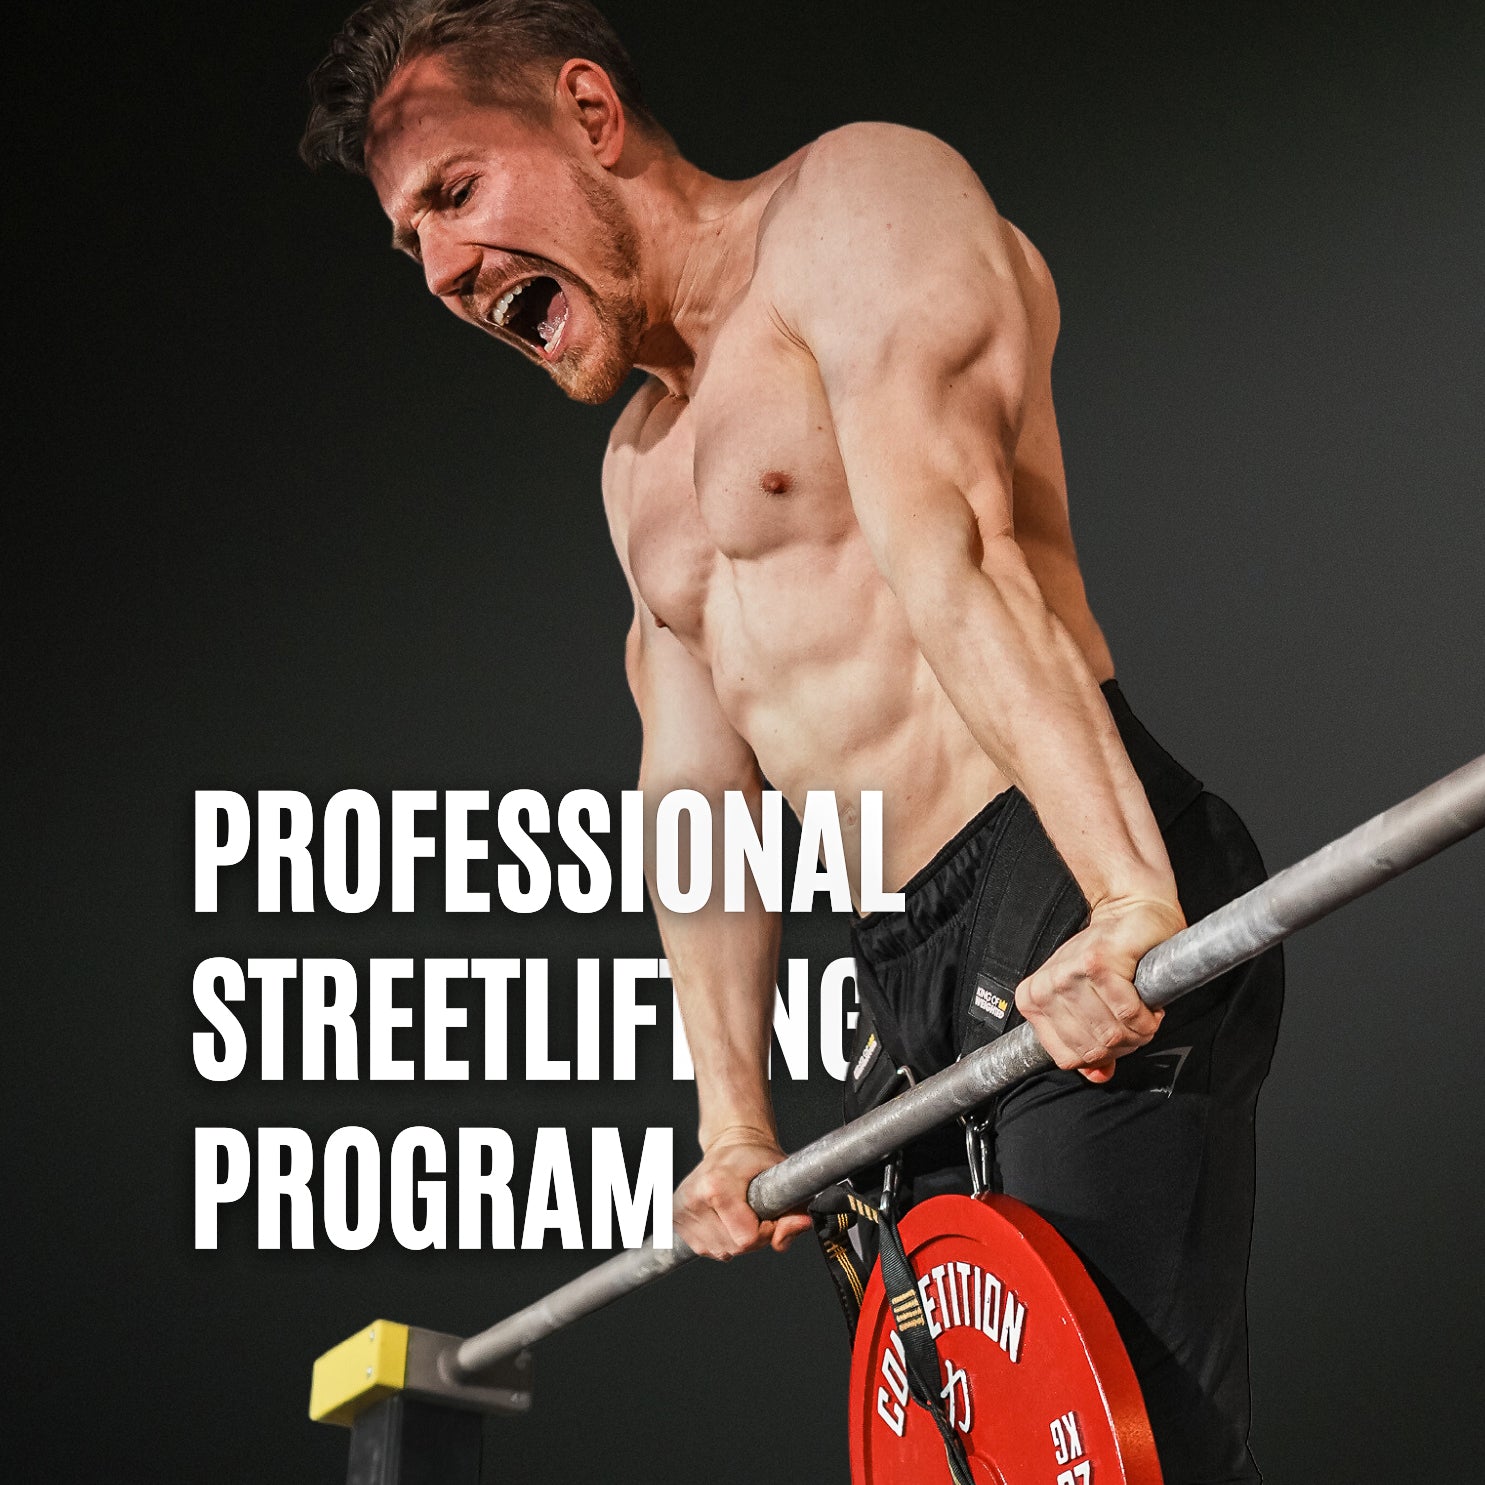 Professional Streetlifting Program